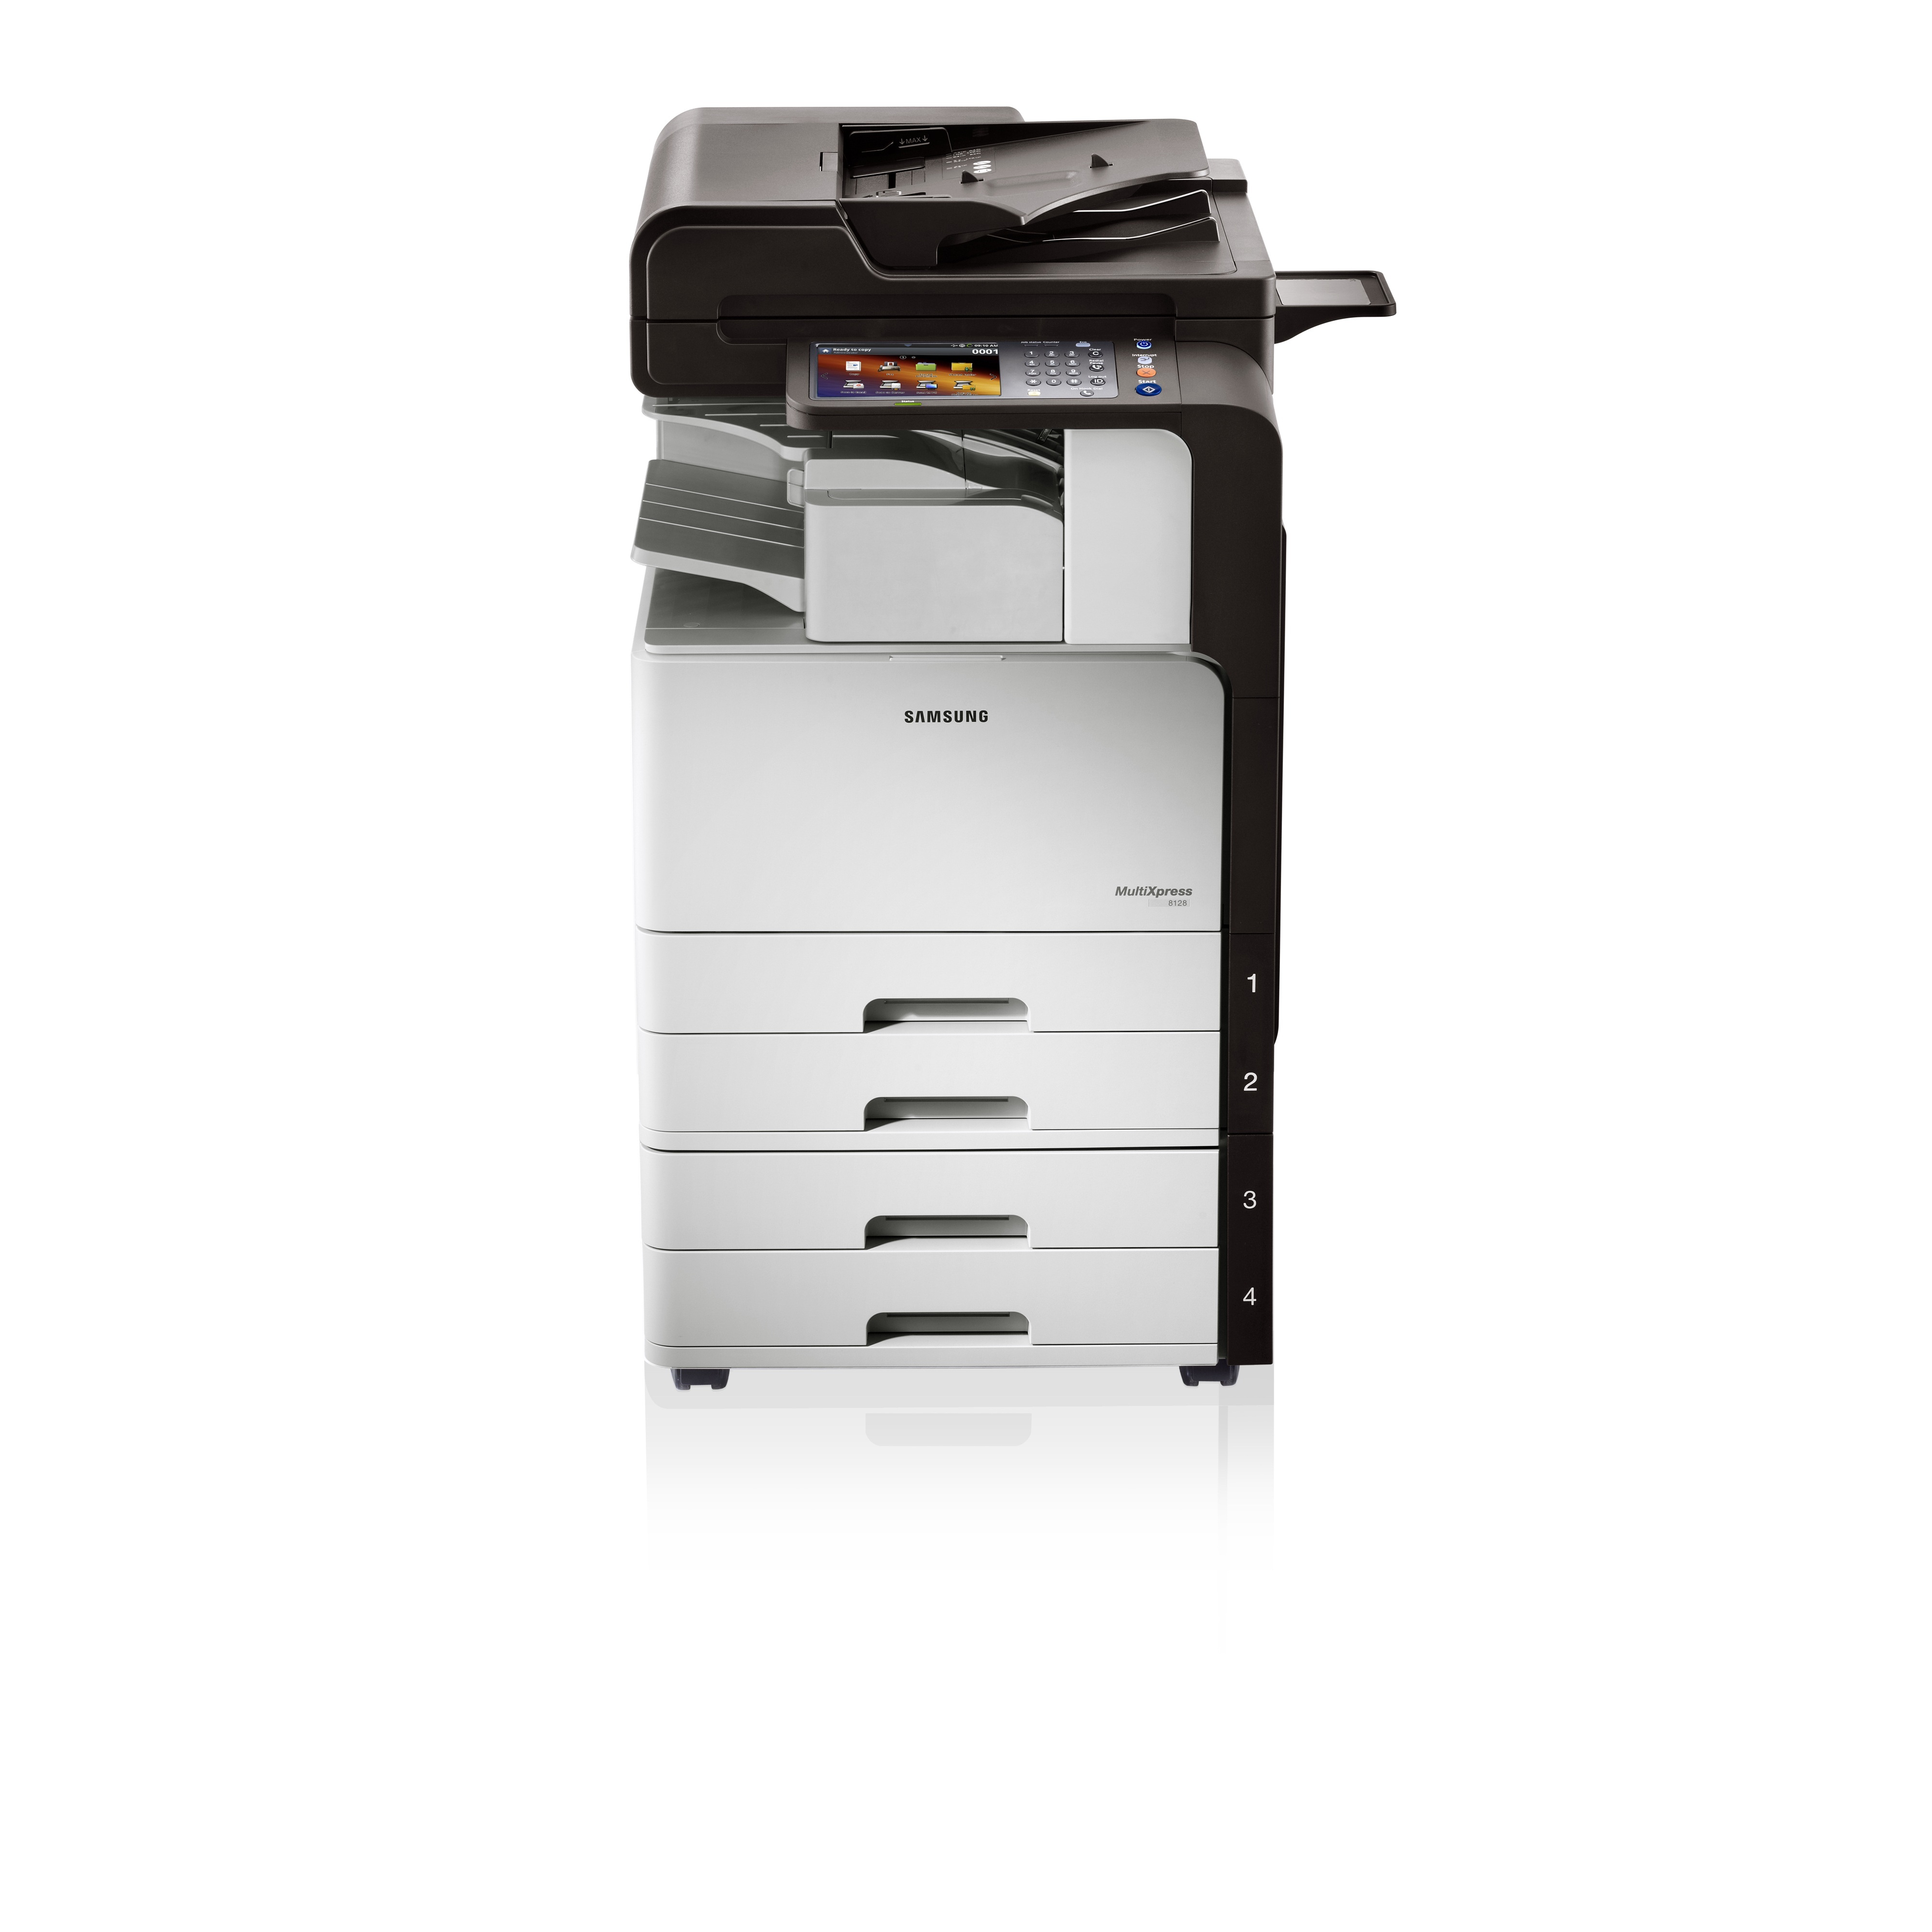 Samsung MultiXpress CLX-9206 Laser Multifunction Printer series